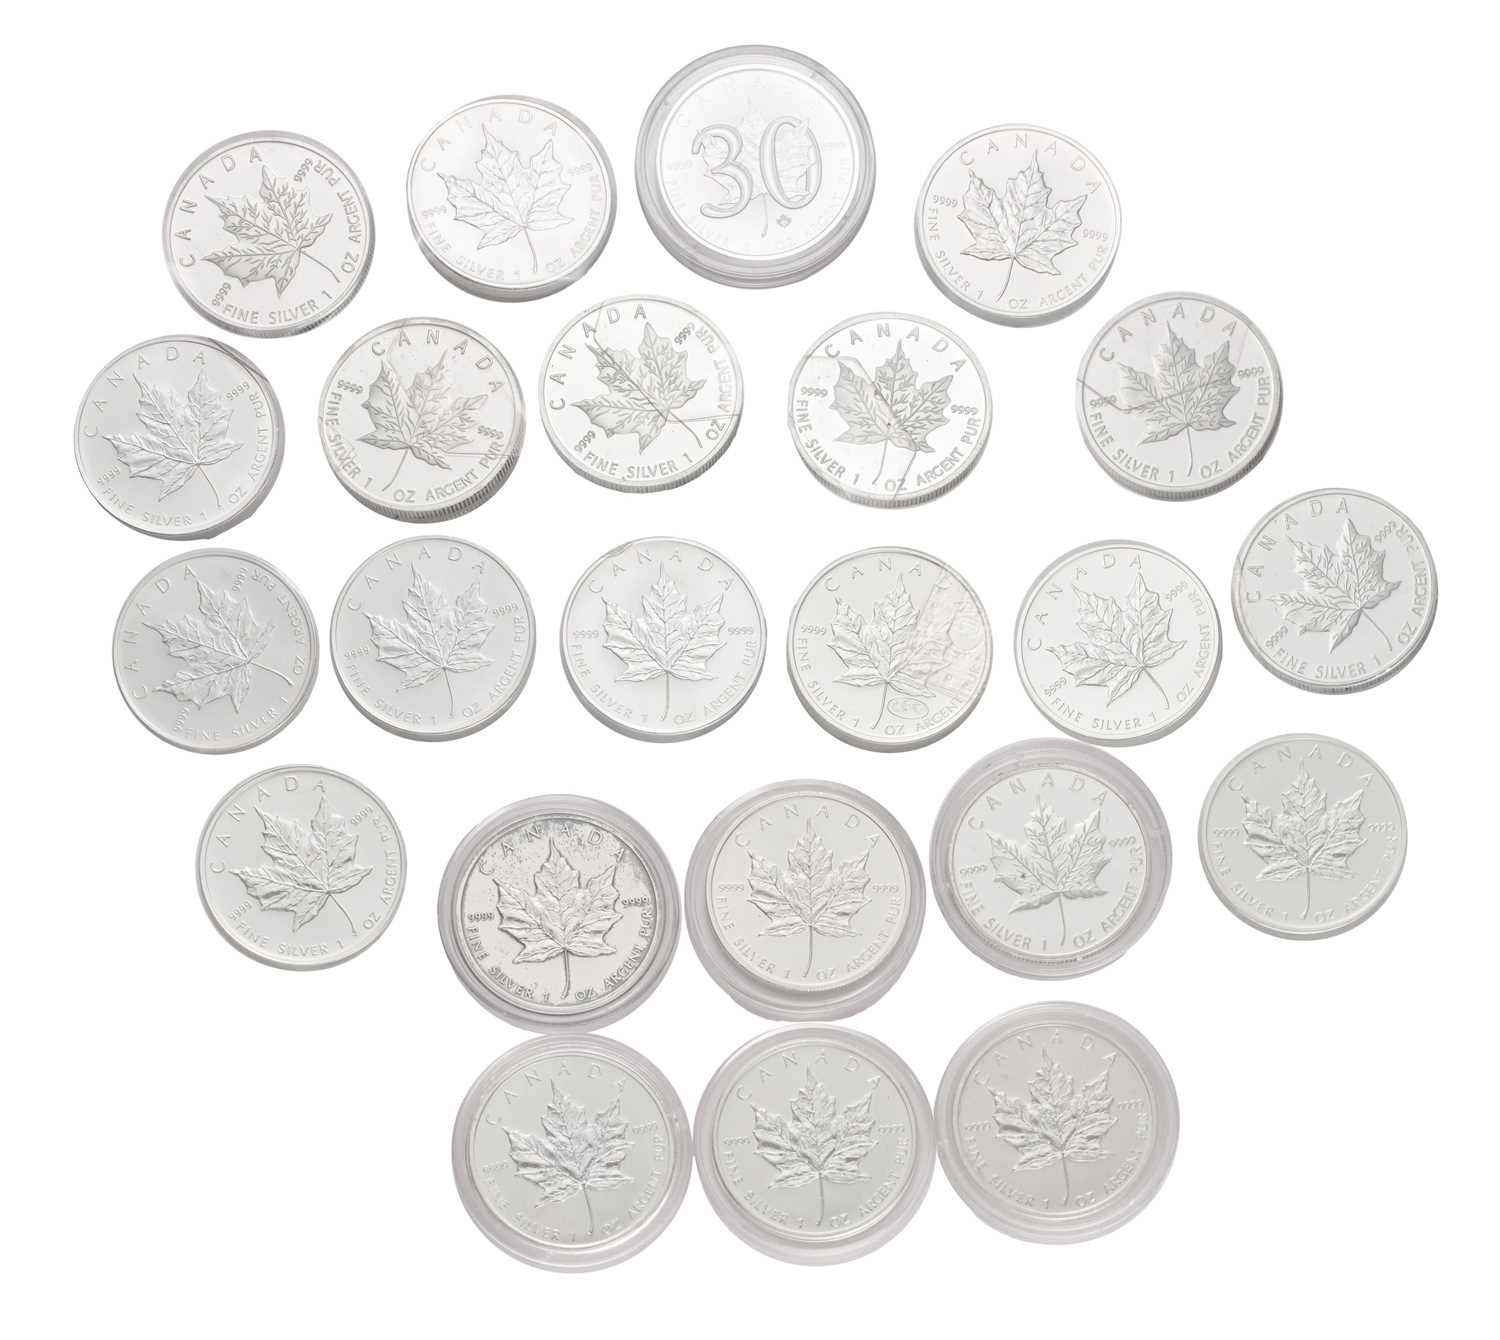 23x Canada 1oz Fine Silver Maple Leaf Coins, to include; 2x 1997, 1998, 1999, 2x 2003, 5x 2006, 2x